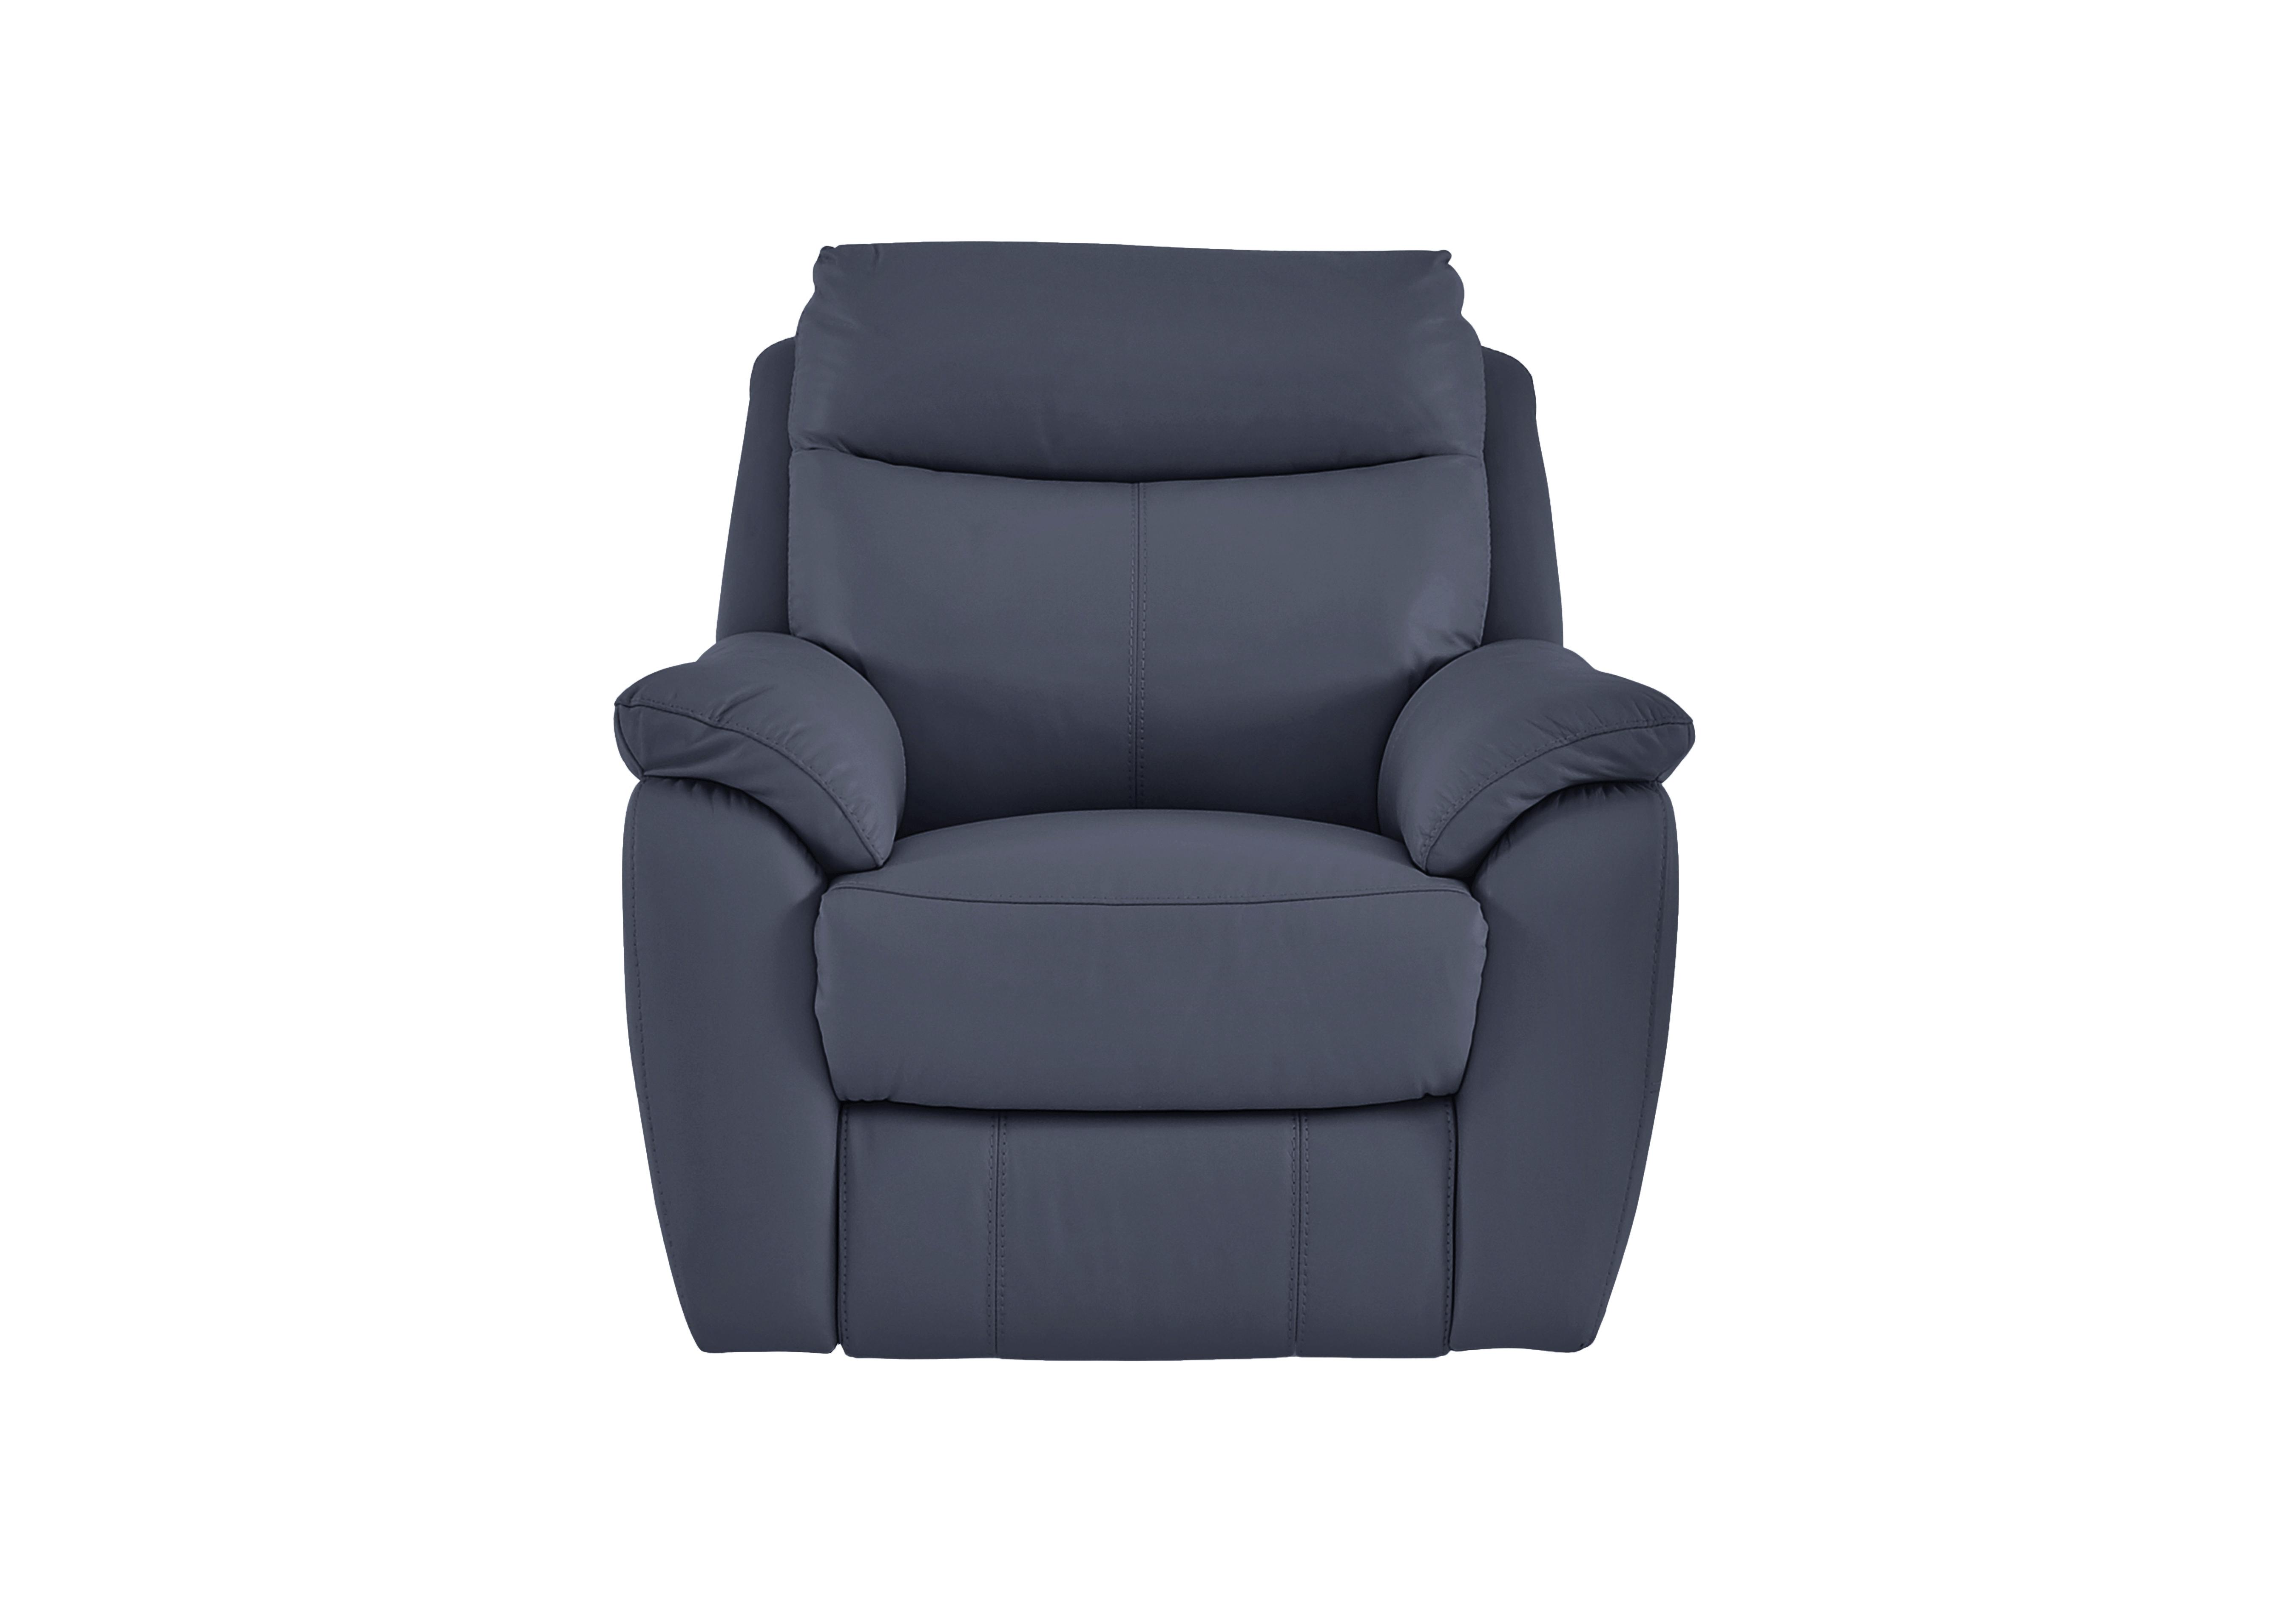 Snug Leather Armchair in Bv-313e Ocean Blue on Furniture Village